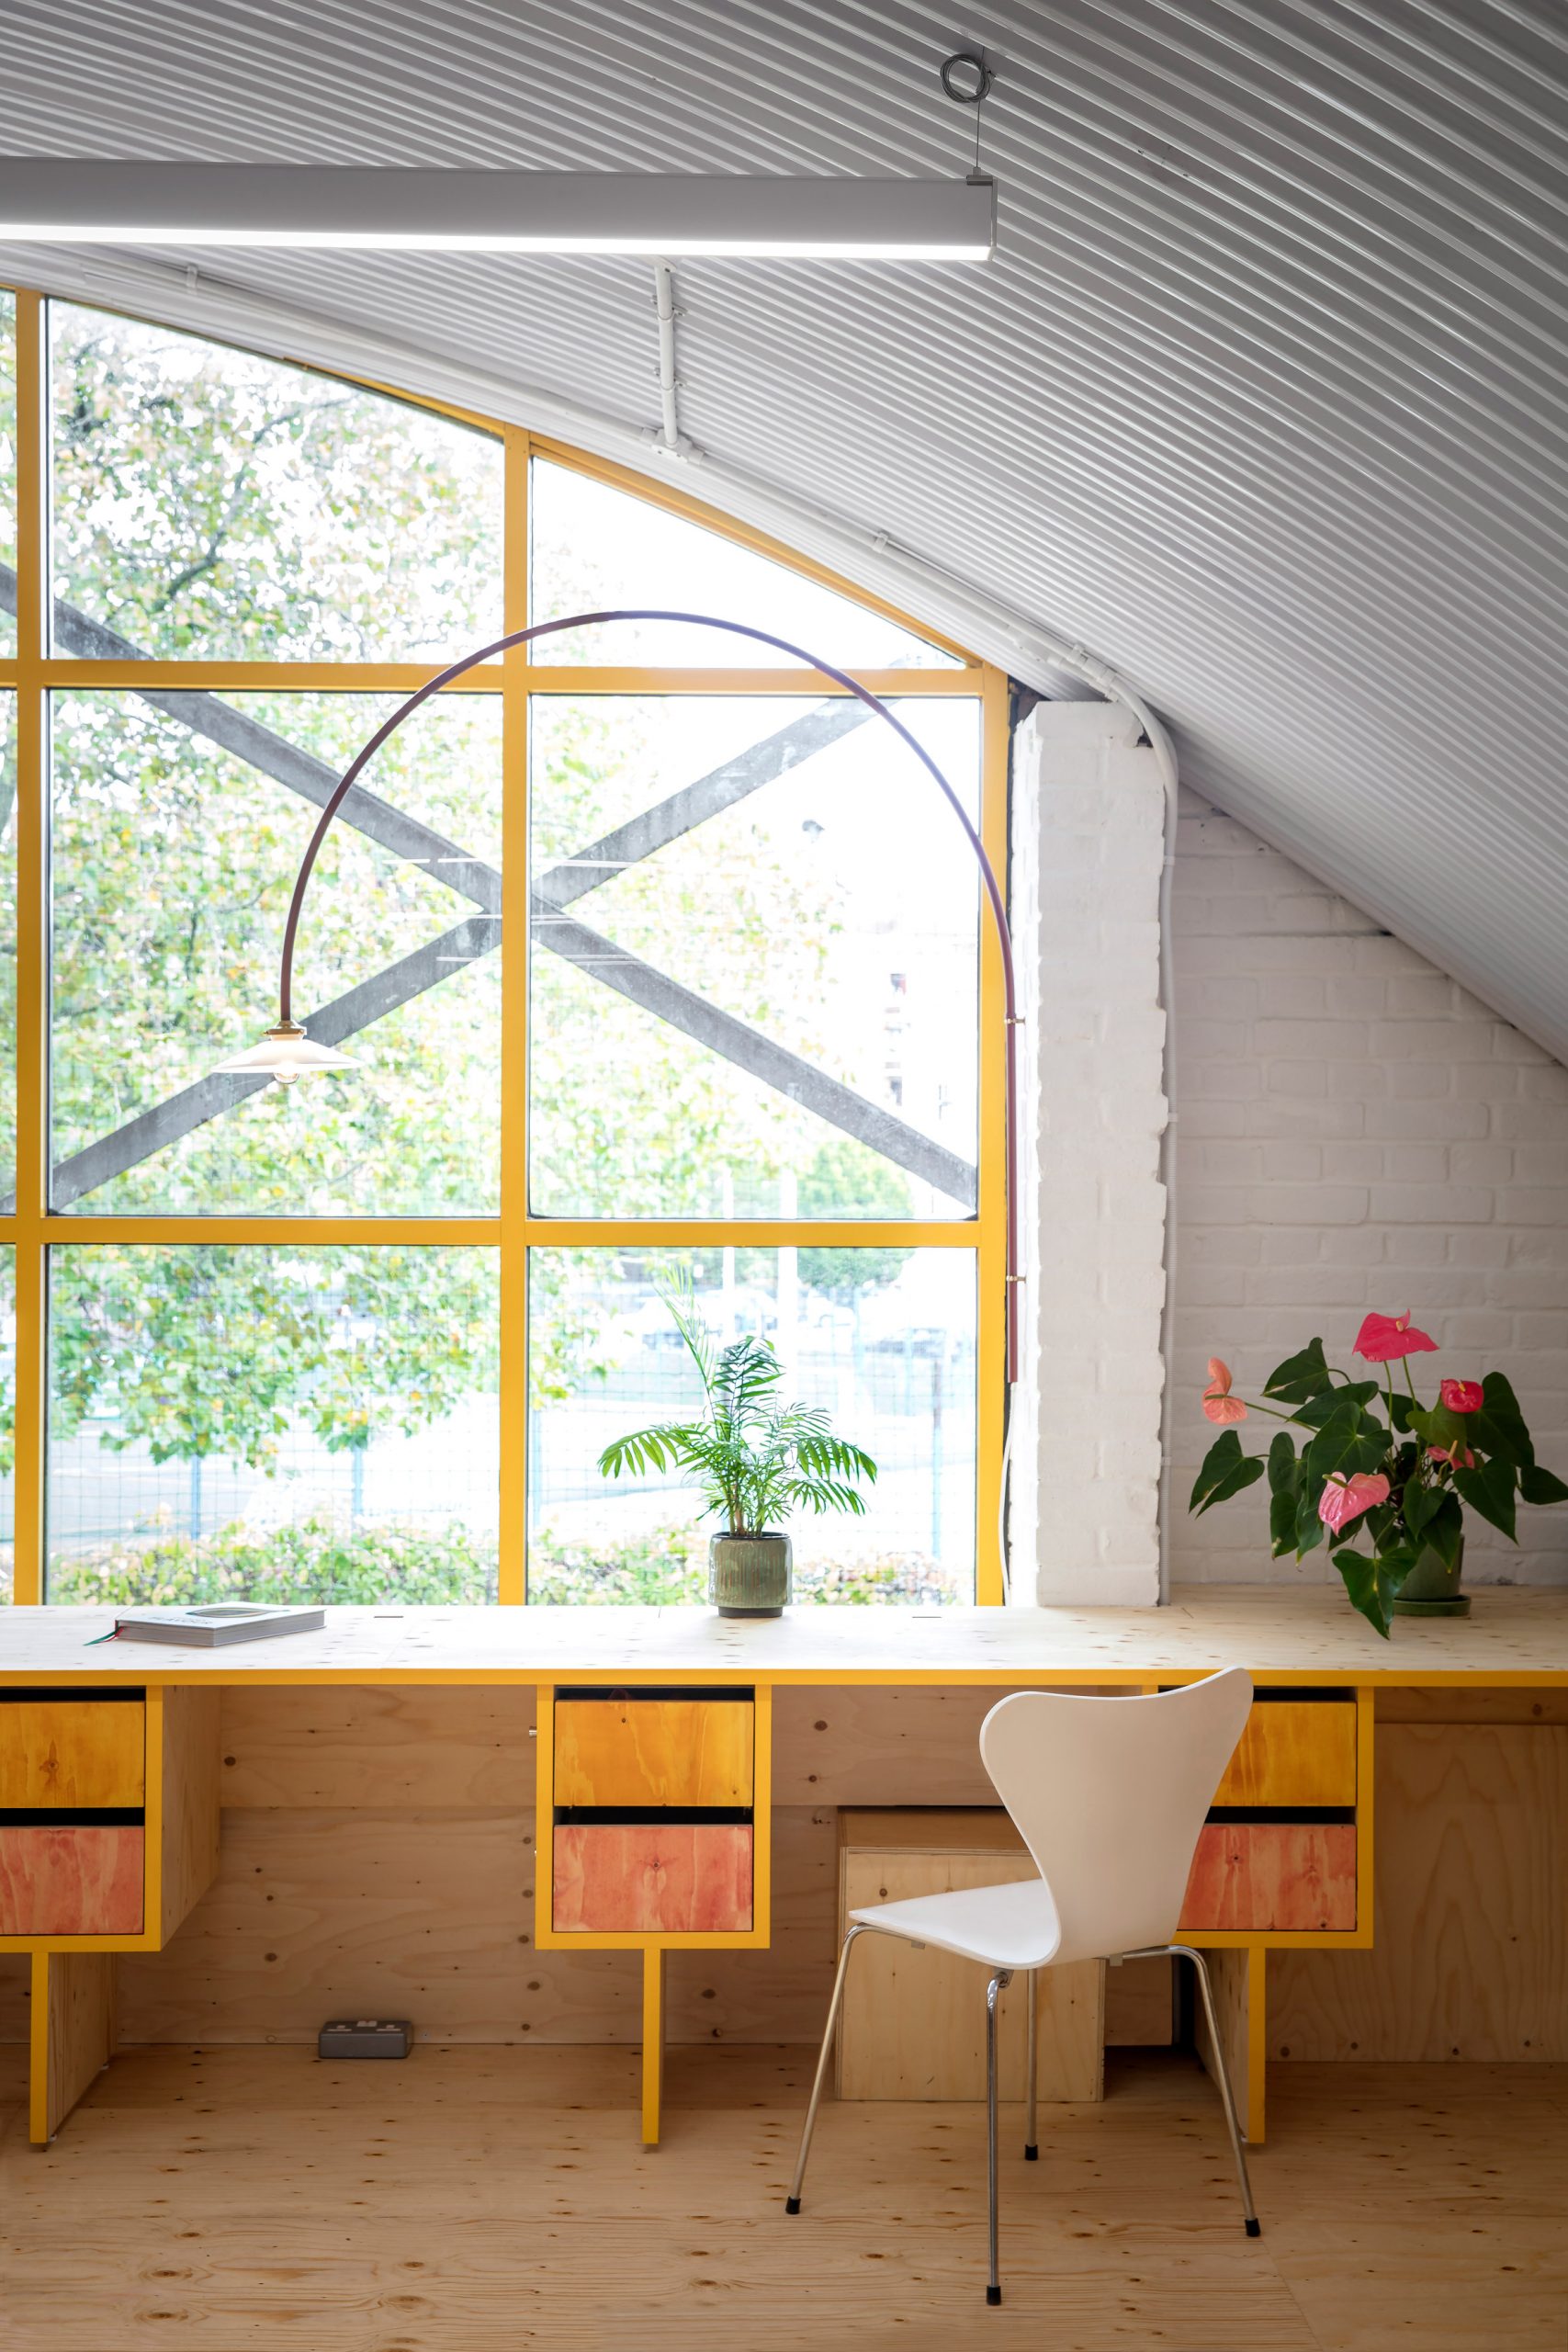 Yotam Ottolenghi's test kitchen features plywood furniture